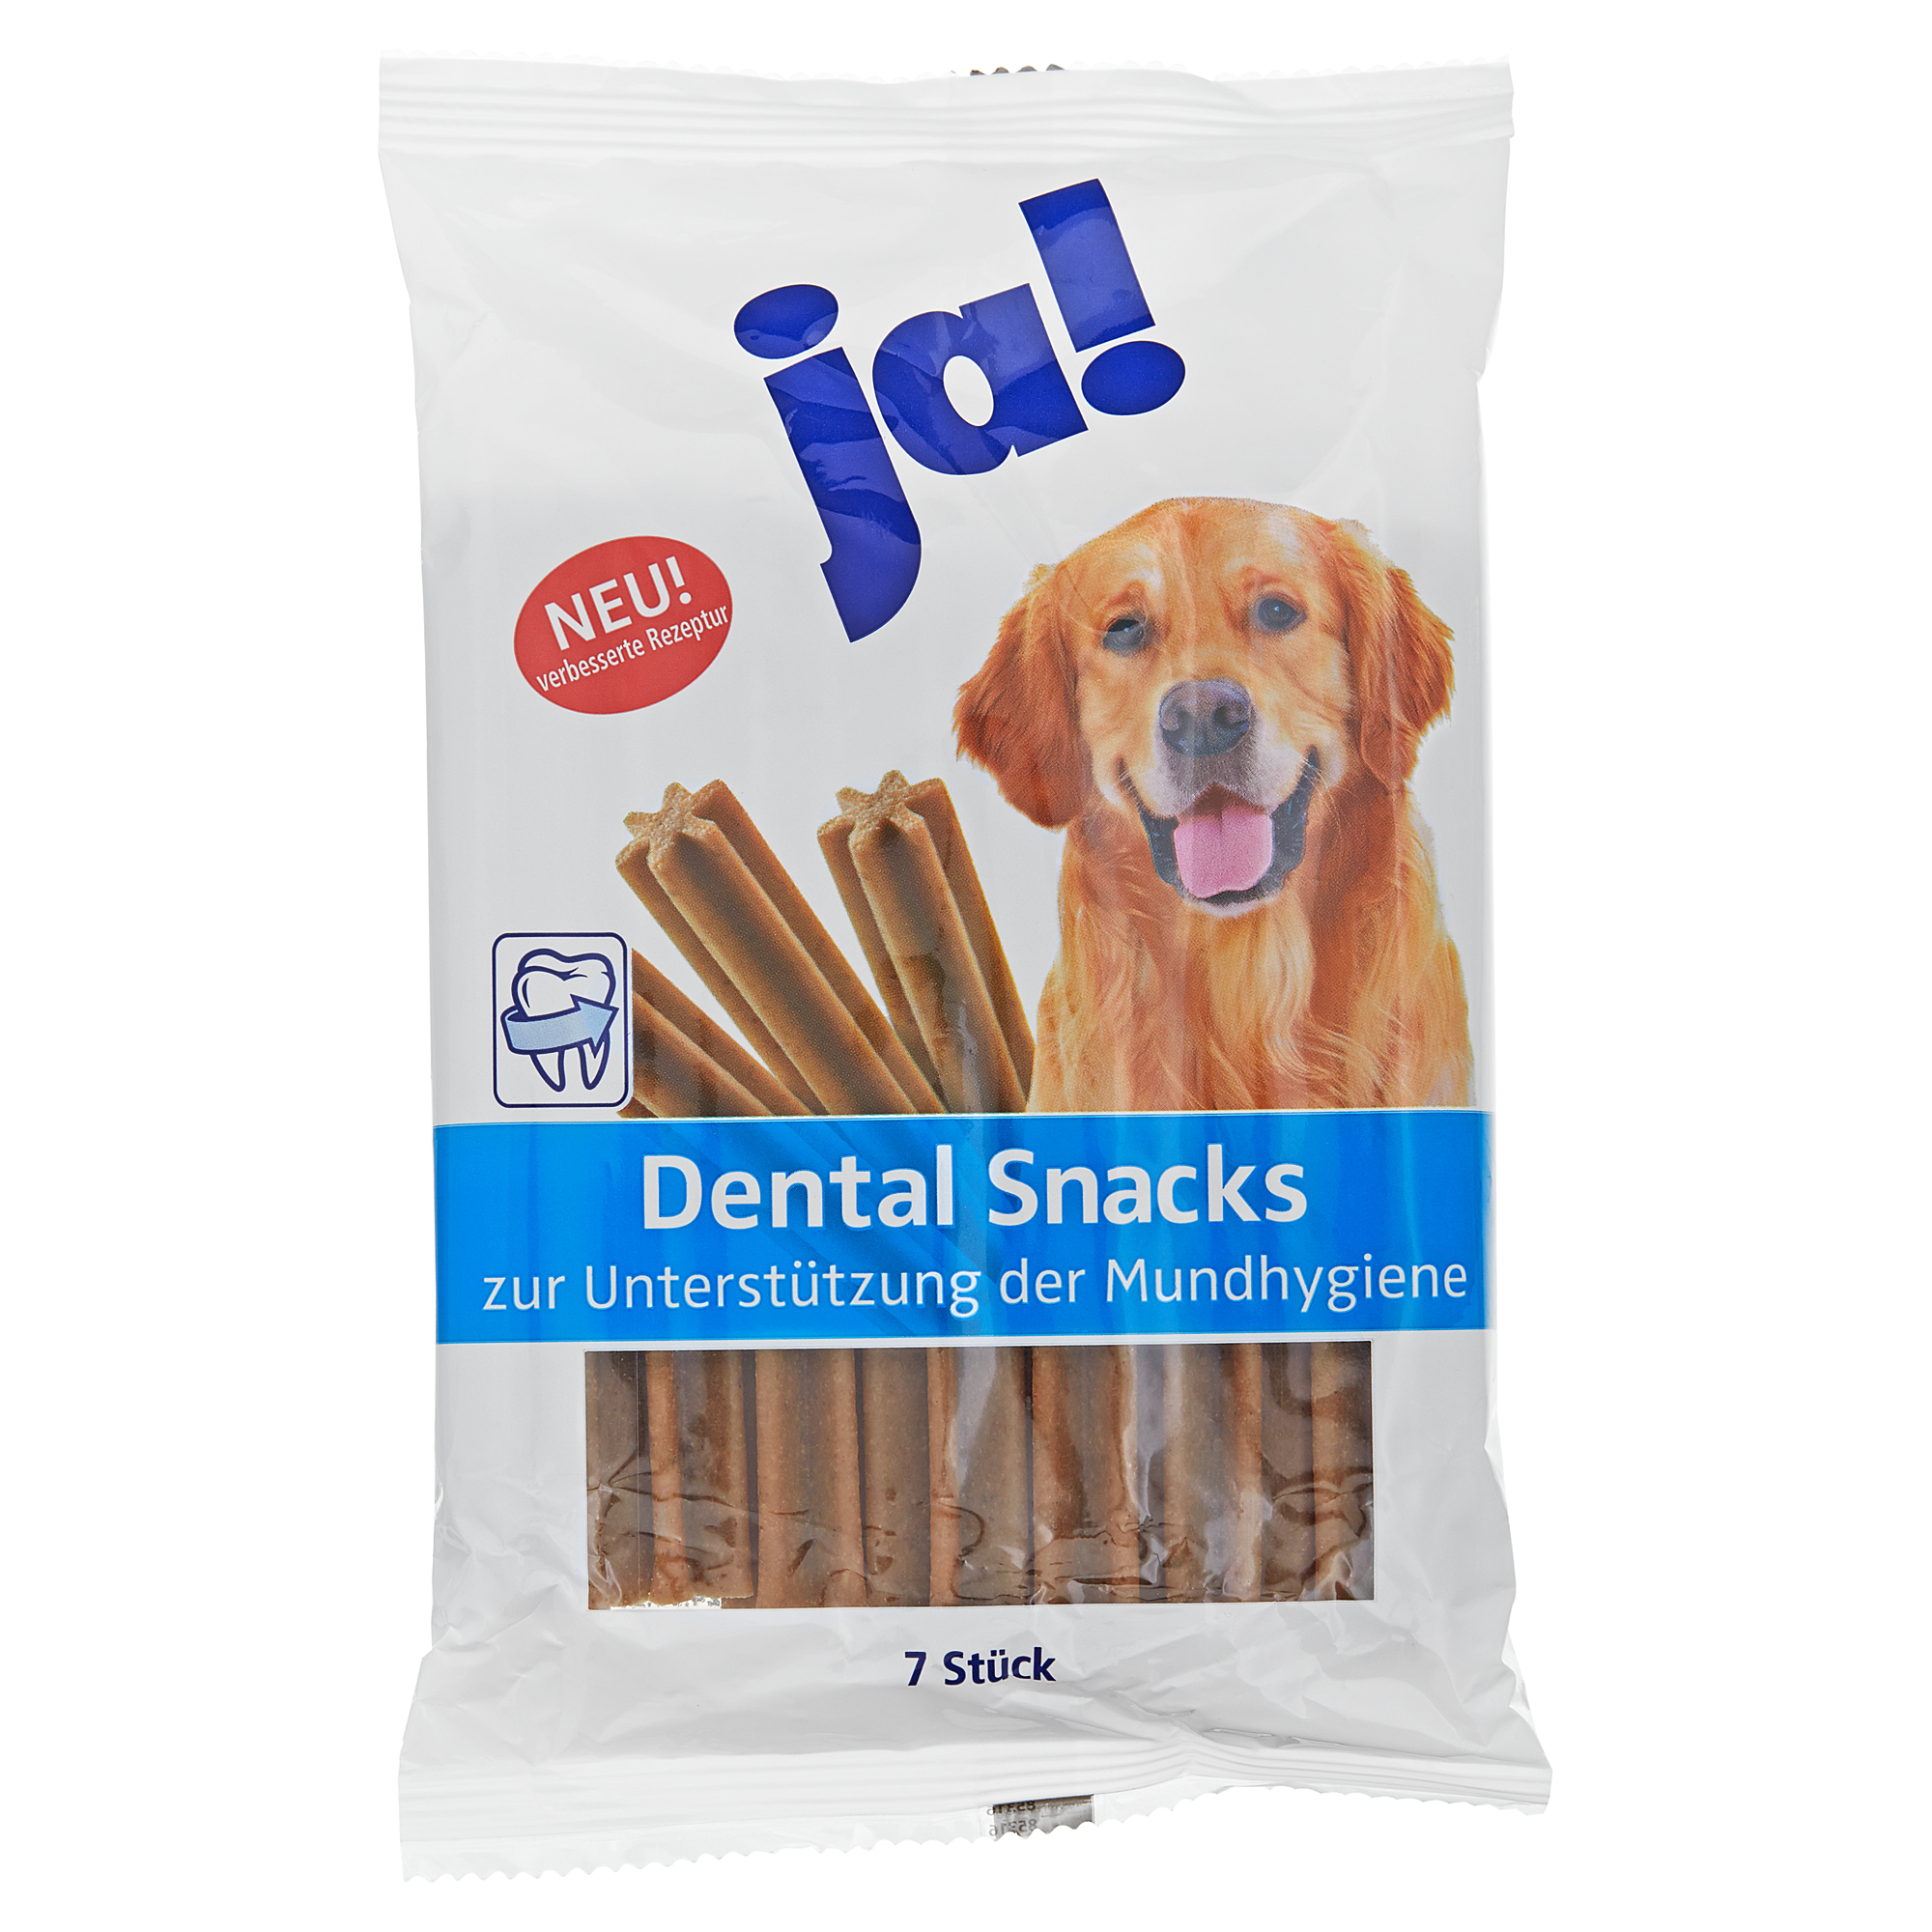 Hundeergänzungsfutter "Dental Snacks" 7 Stück + product picture